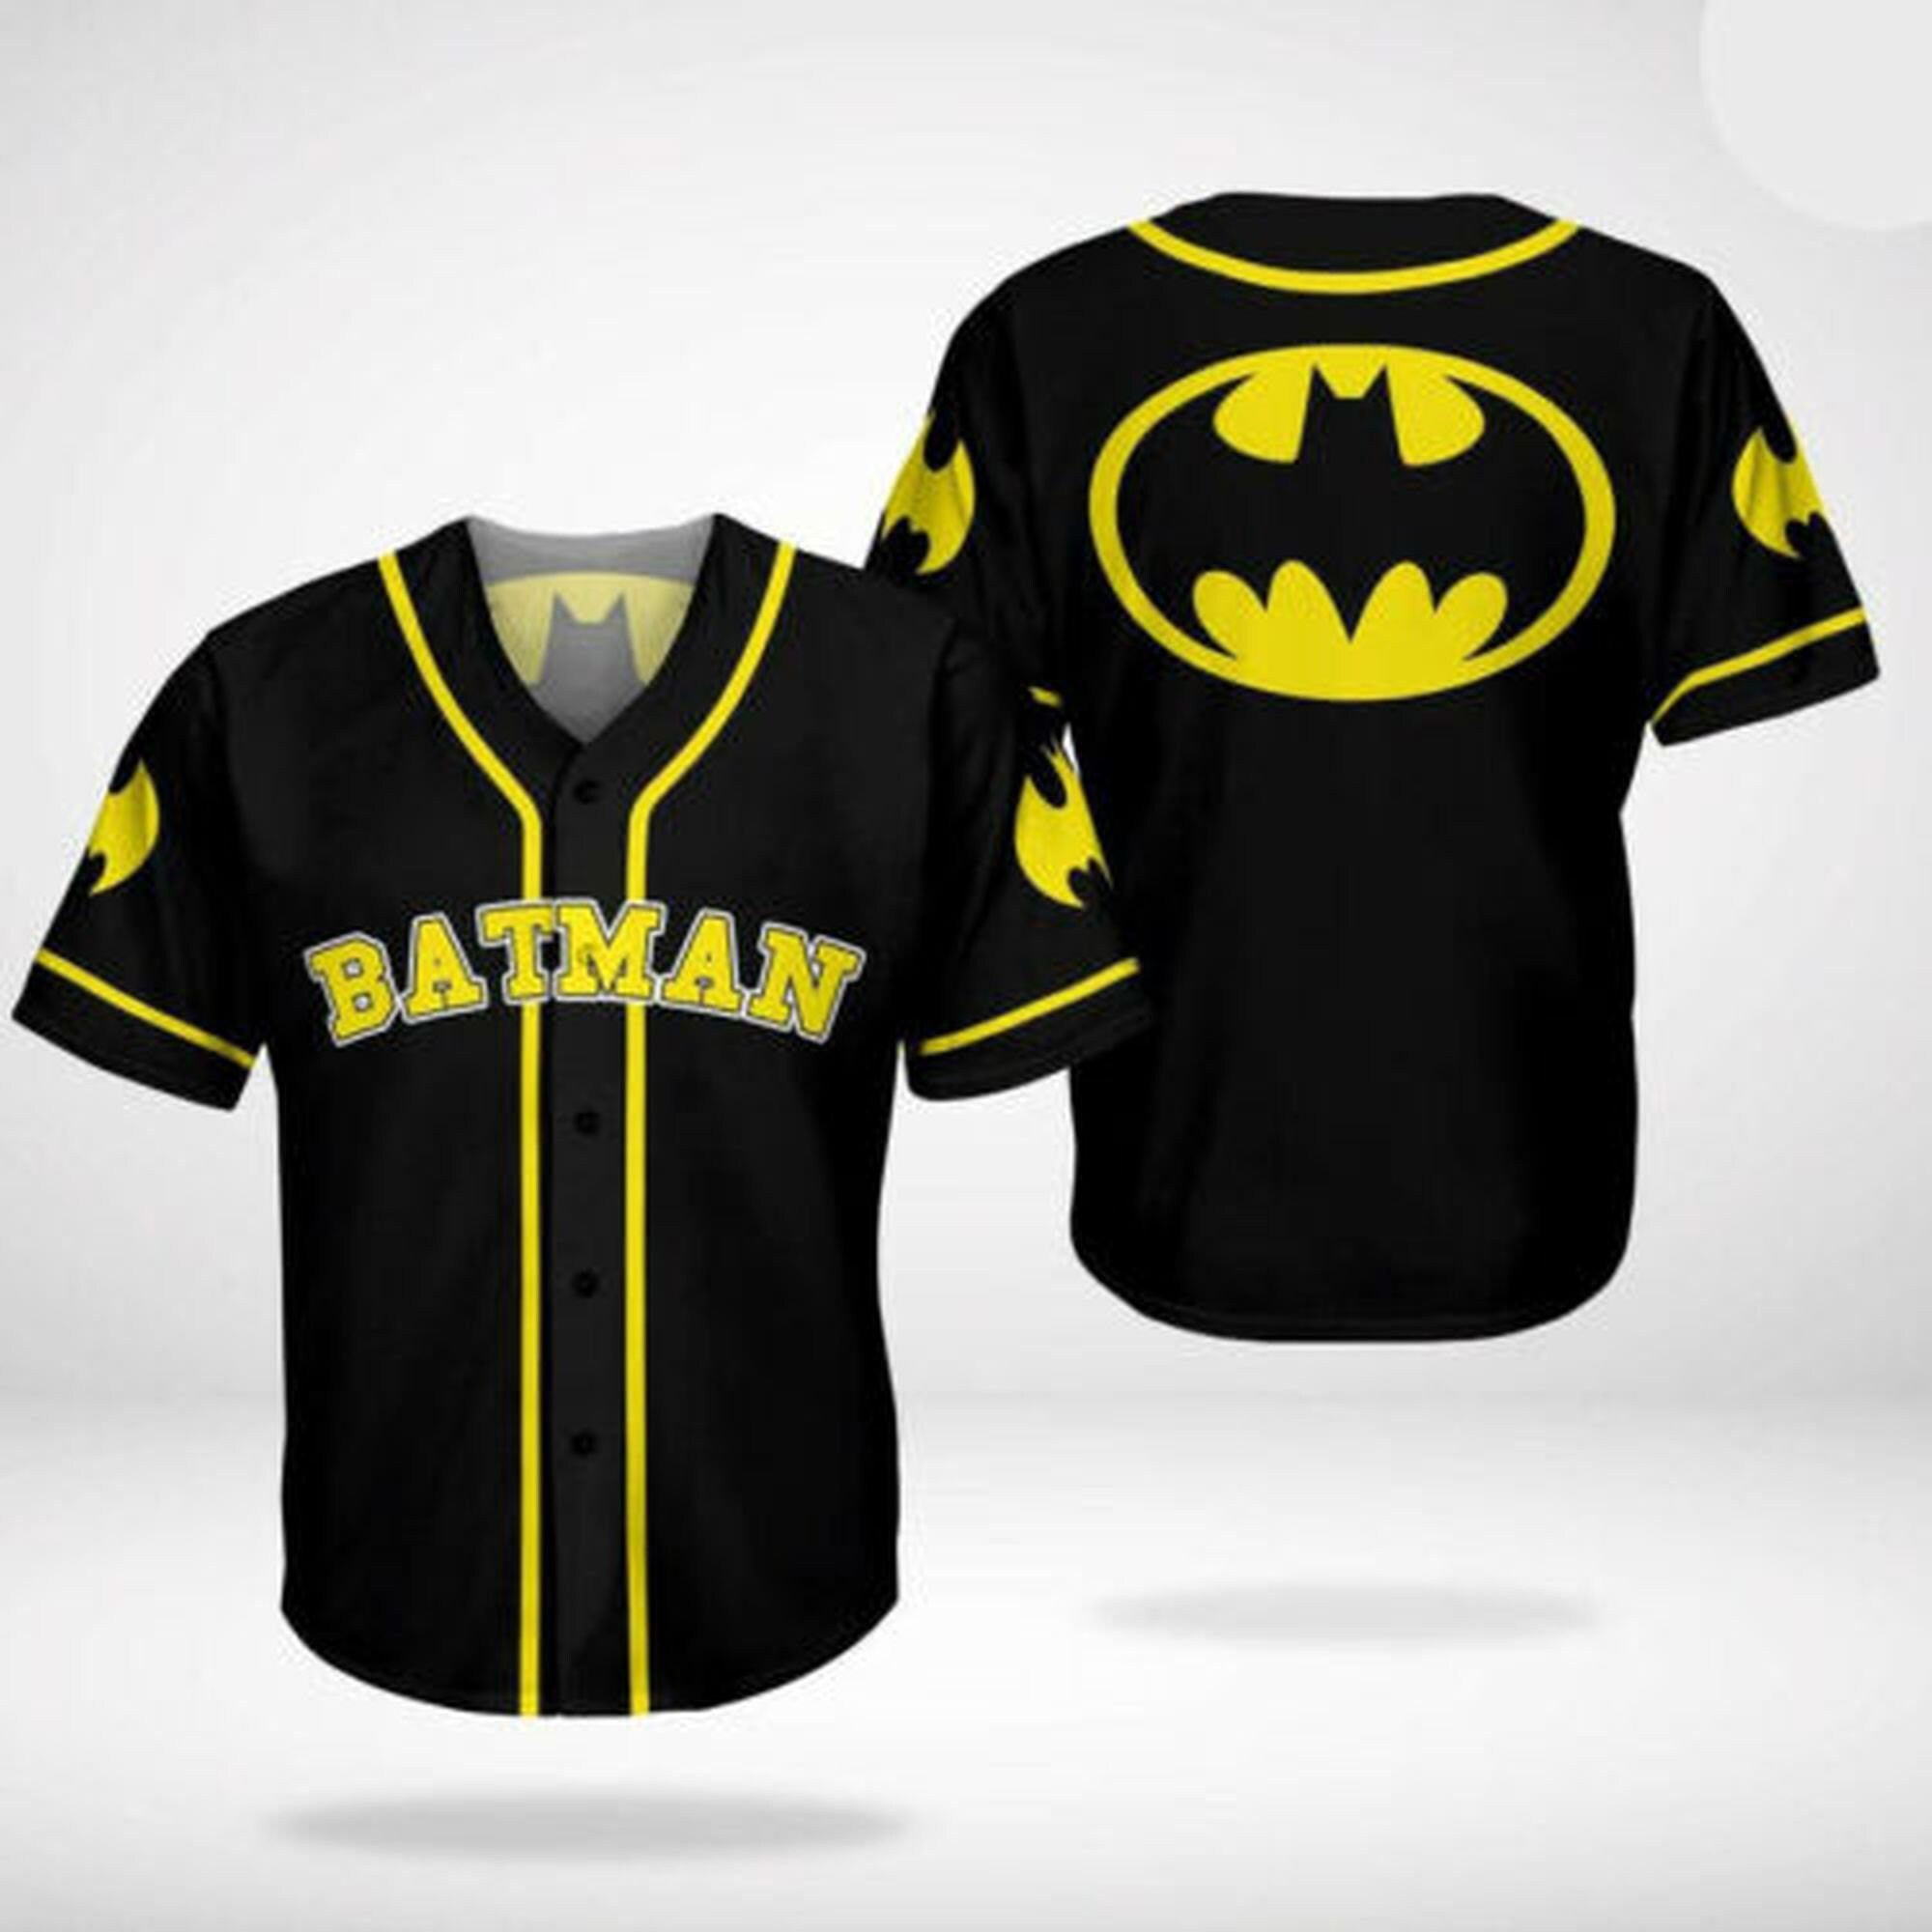 Batman Dark Knight Baseball Jersey